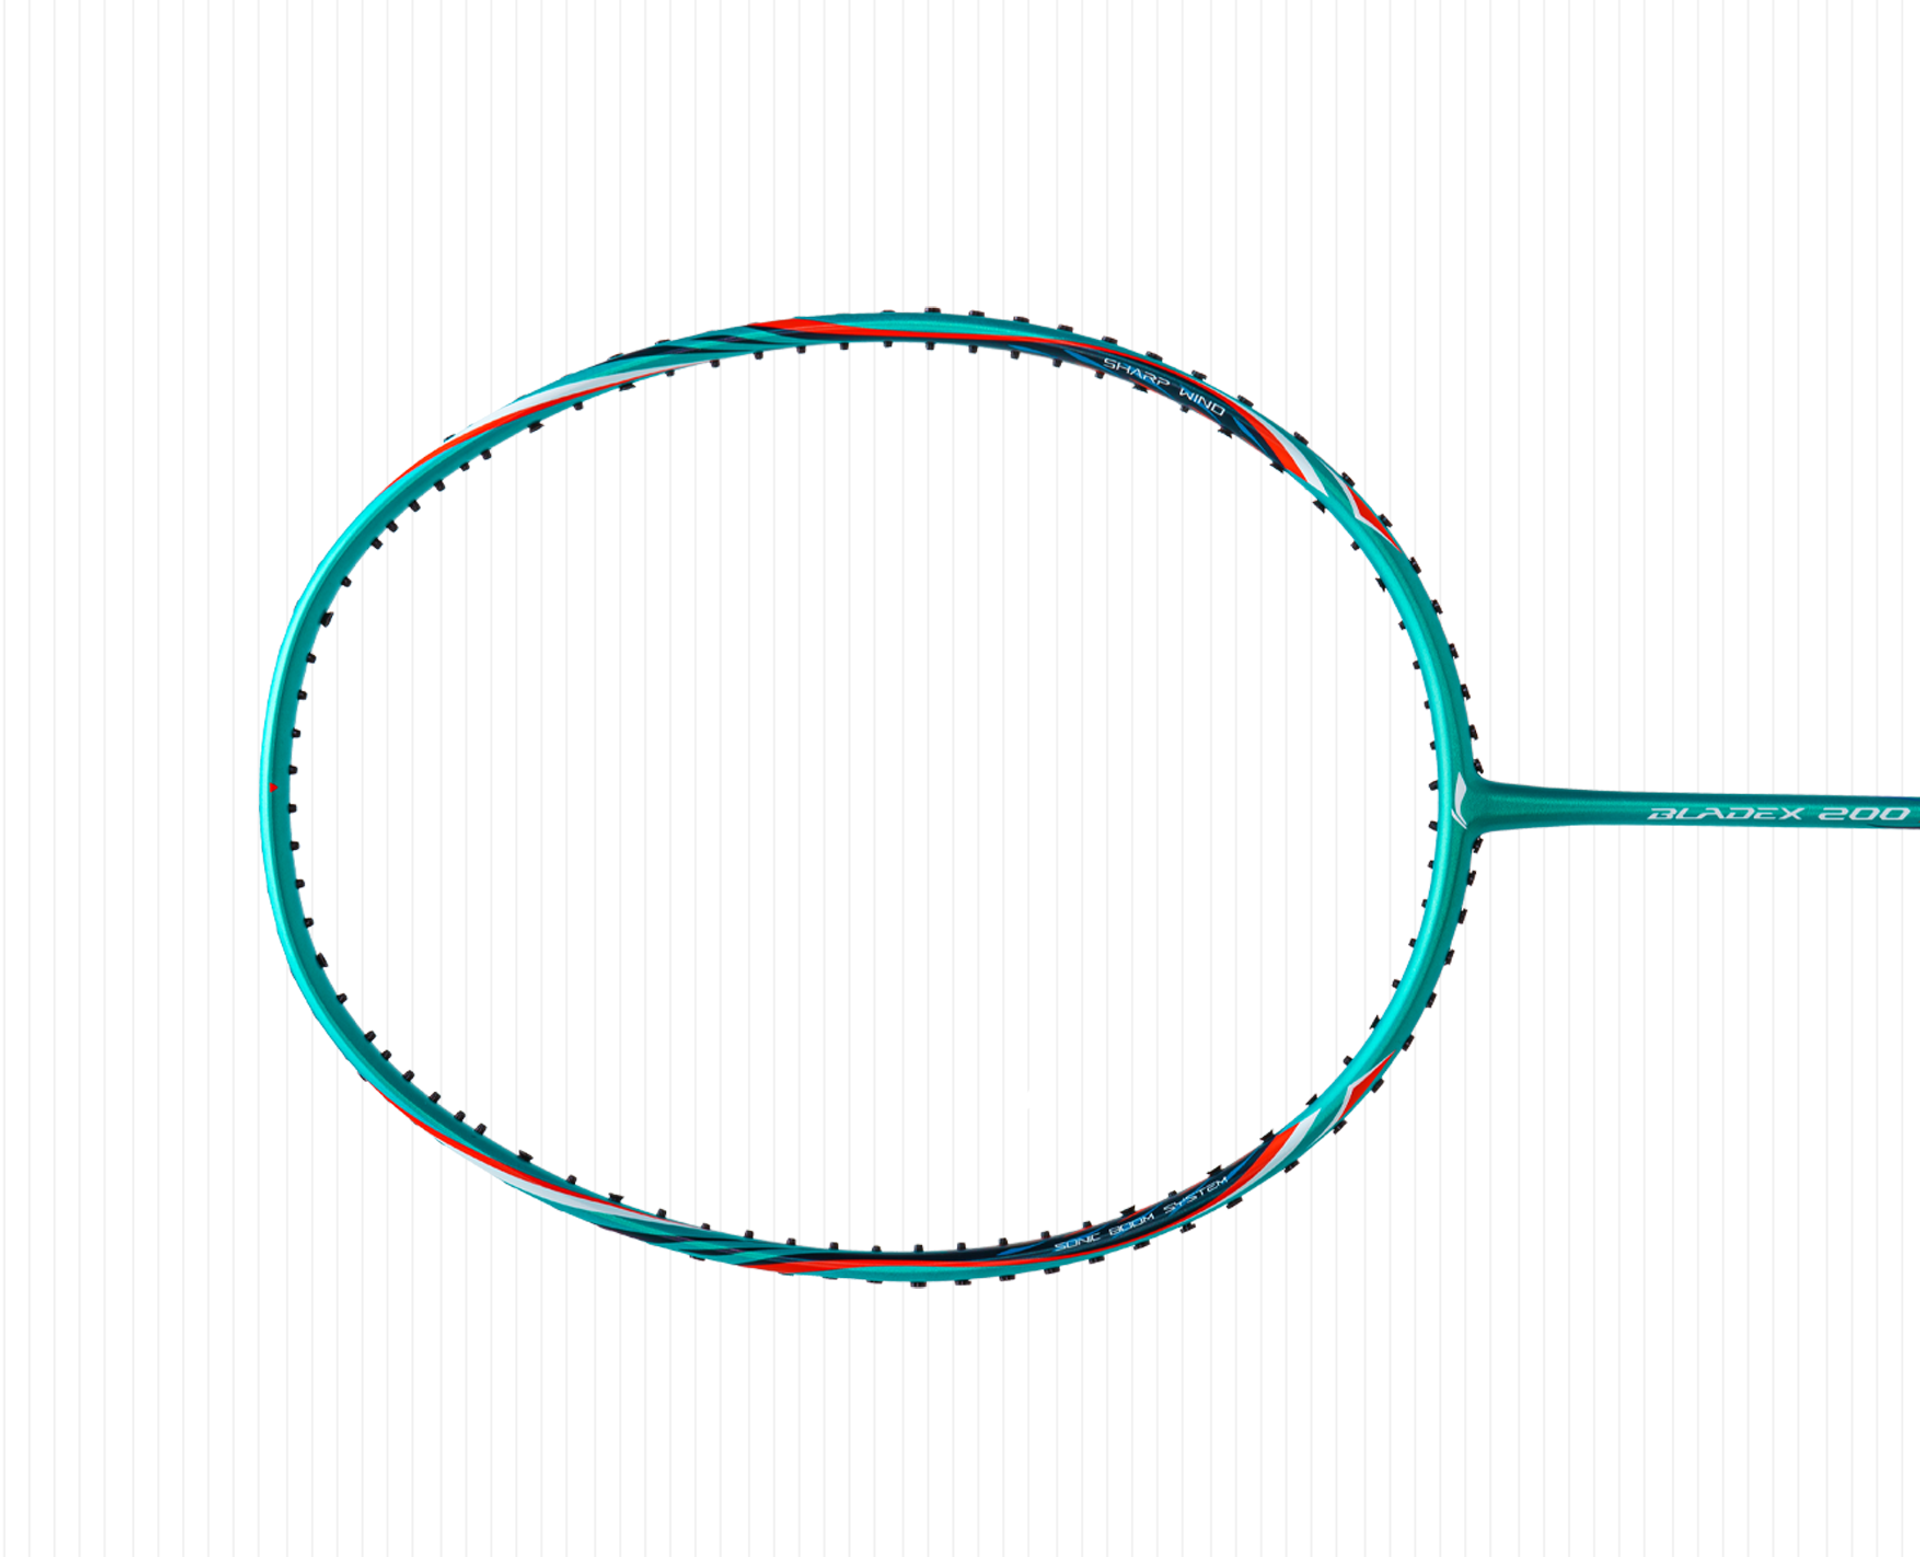 Close up view of Blade X 200 Badminton racket frame by Li-Ning Studio